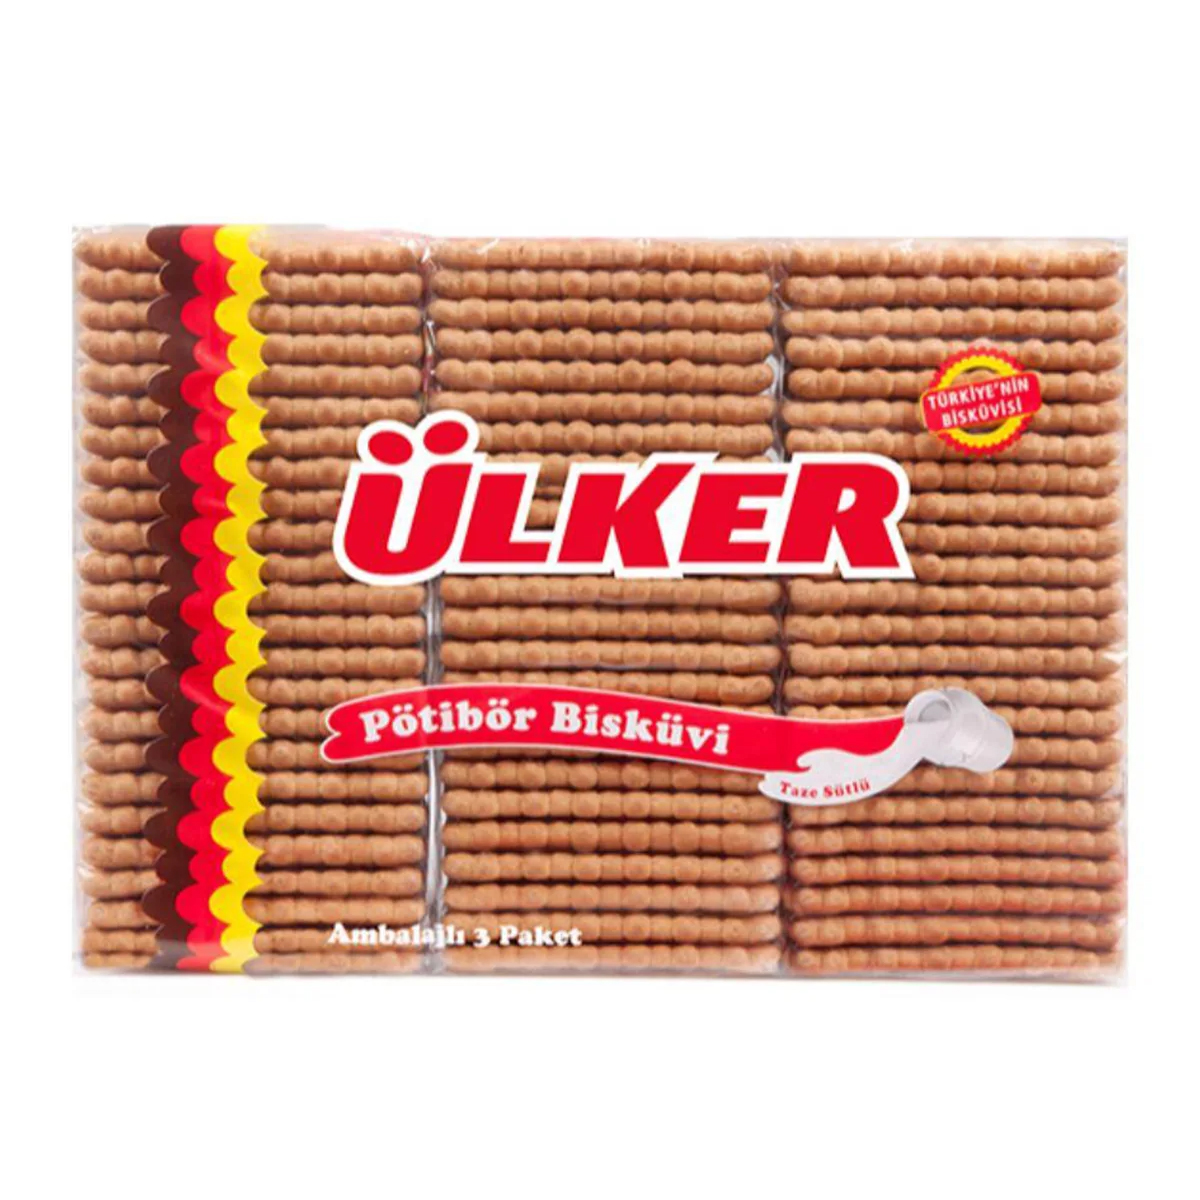 Печенье Ulker Petit Beurre двойной обжарки, 450 г печенье ulker petit beurre 450 г